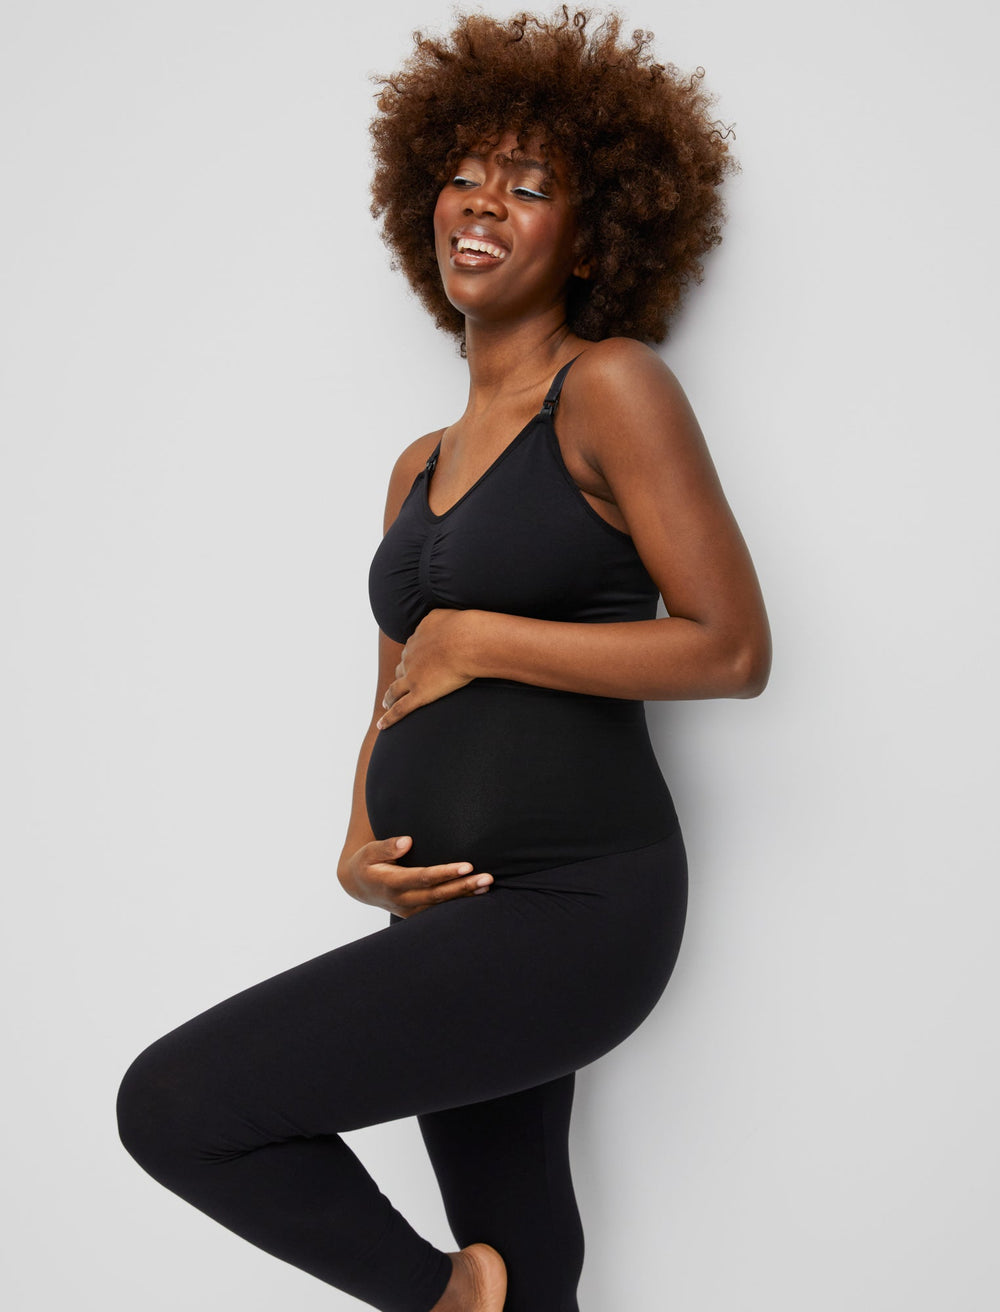 Women's Maternity Solid Leggings Medium Stretchy Yoga Sports